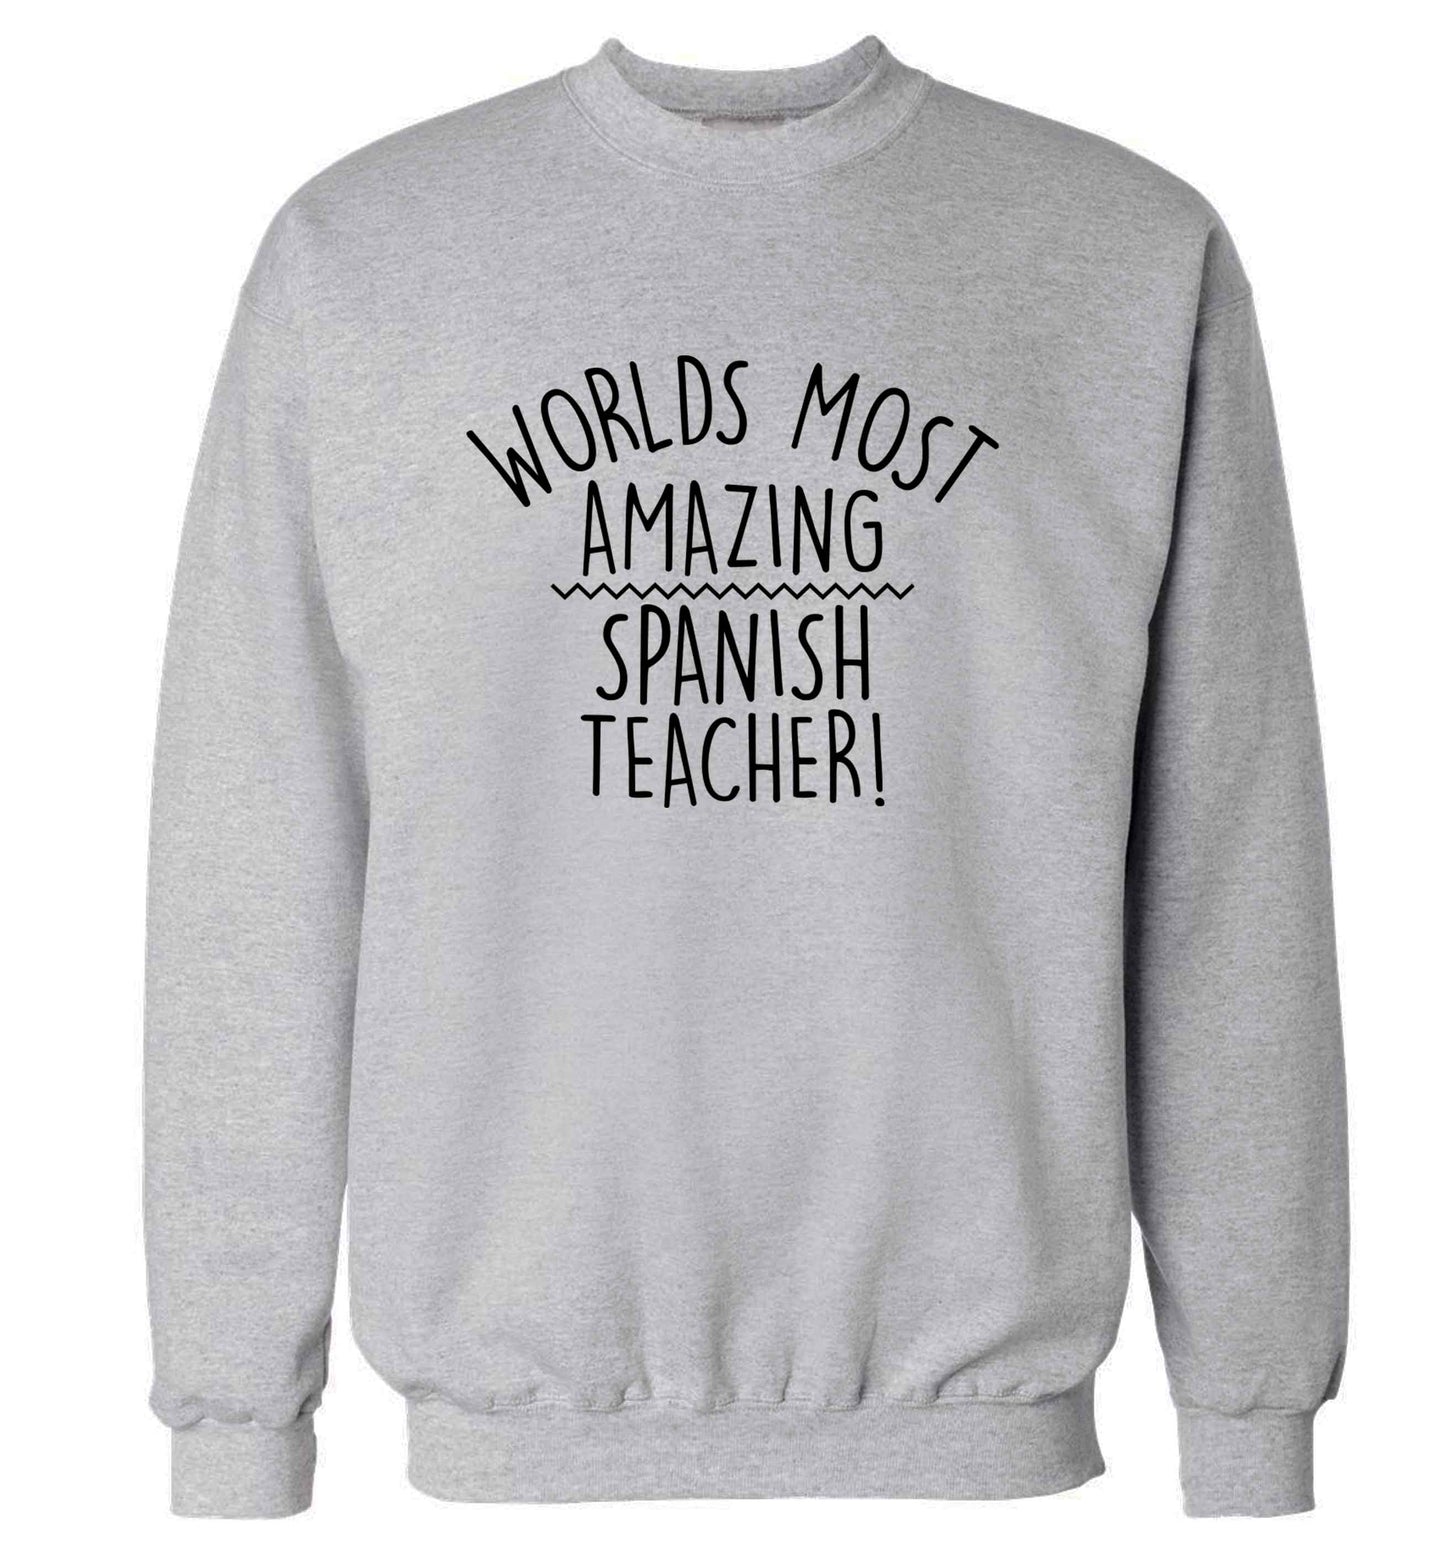 Worlds most amazing Spanish teacher adult's unisex grey sweater 2XL